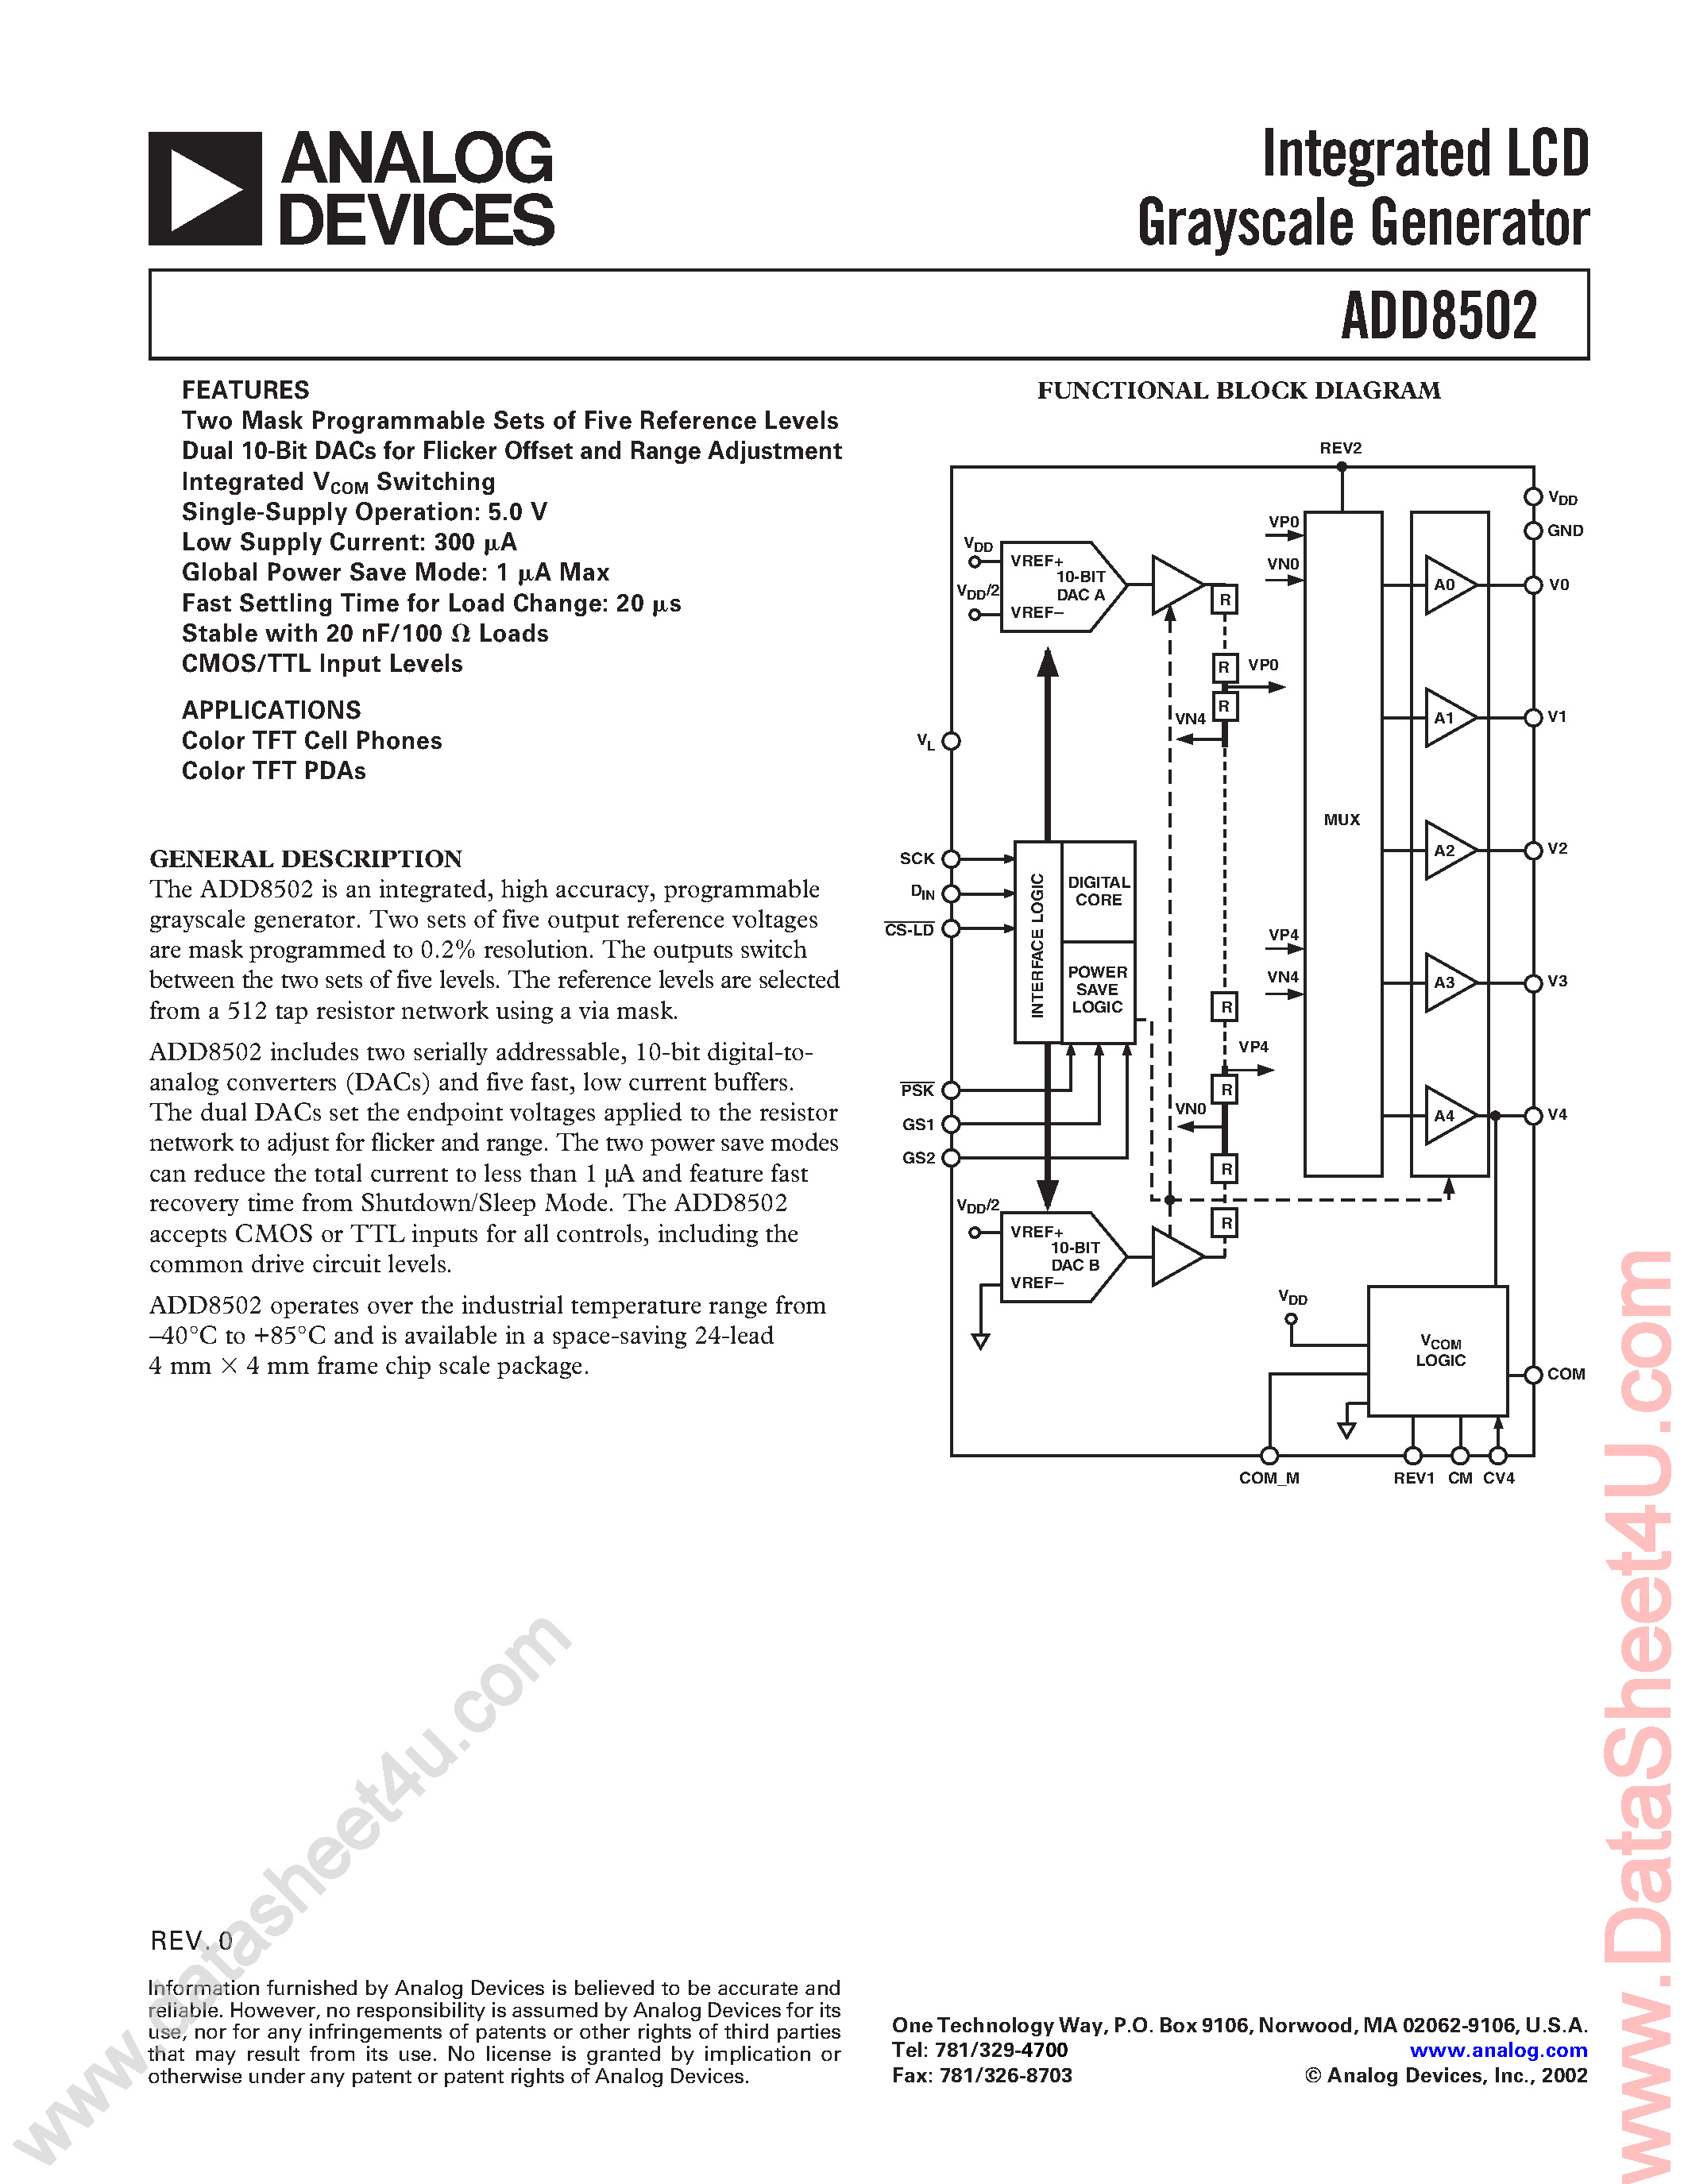 Даташит ADD8502 - Integrated LCD Grayscale Generator страница 1